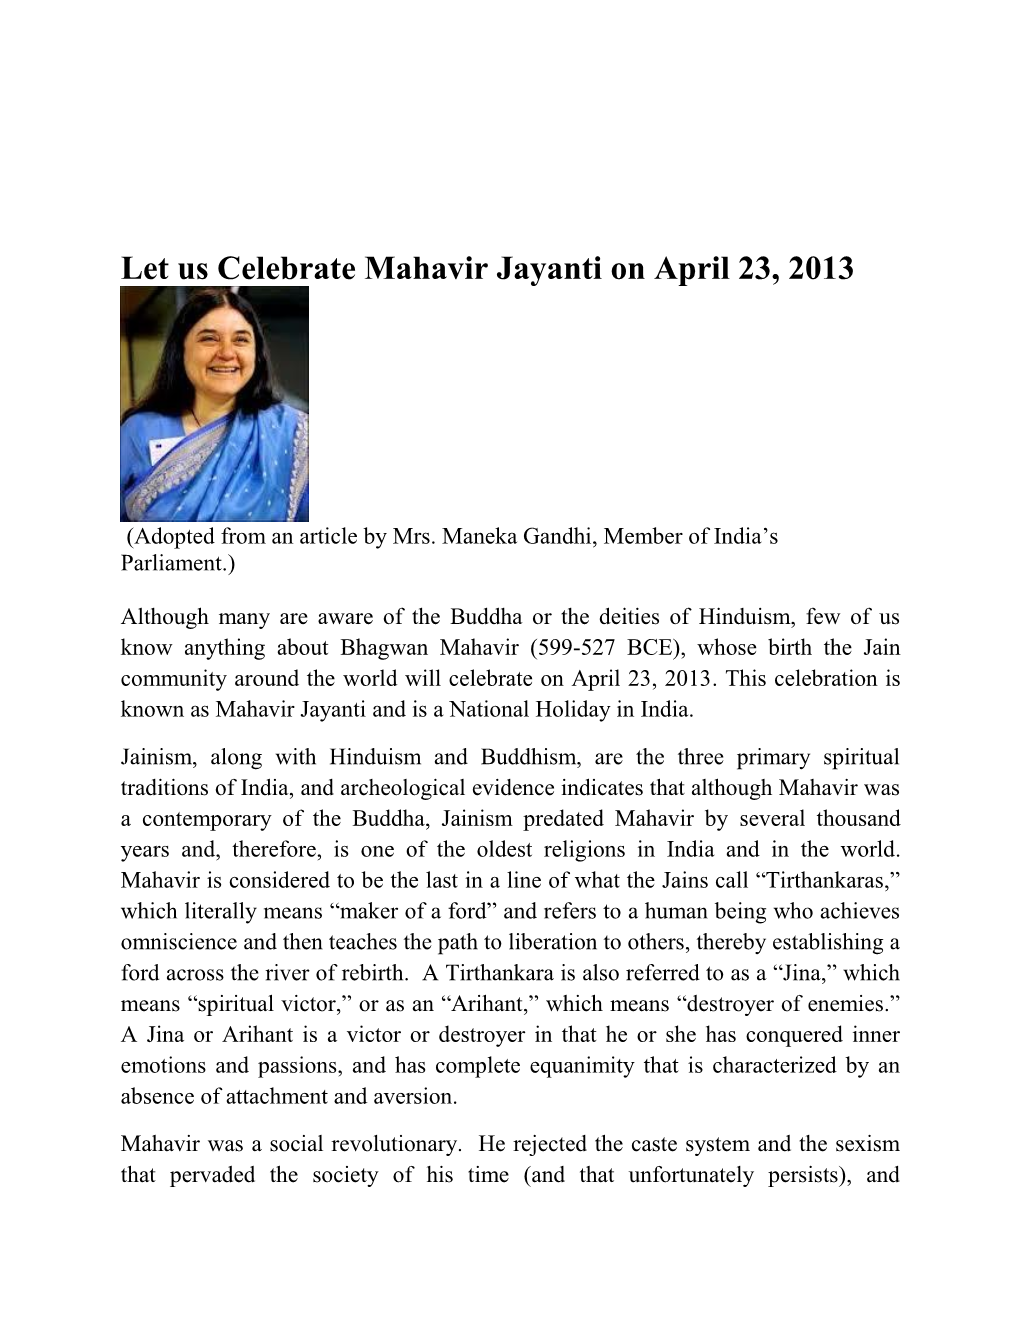 Let Us Celebrate Mahavir Jayanti on April 23, 2013